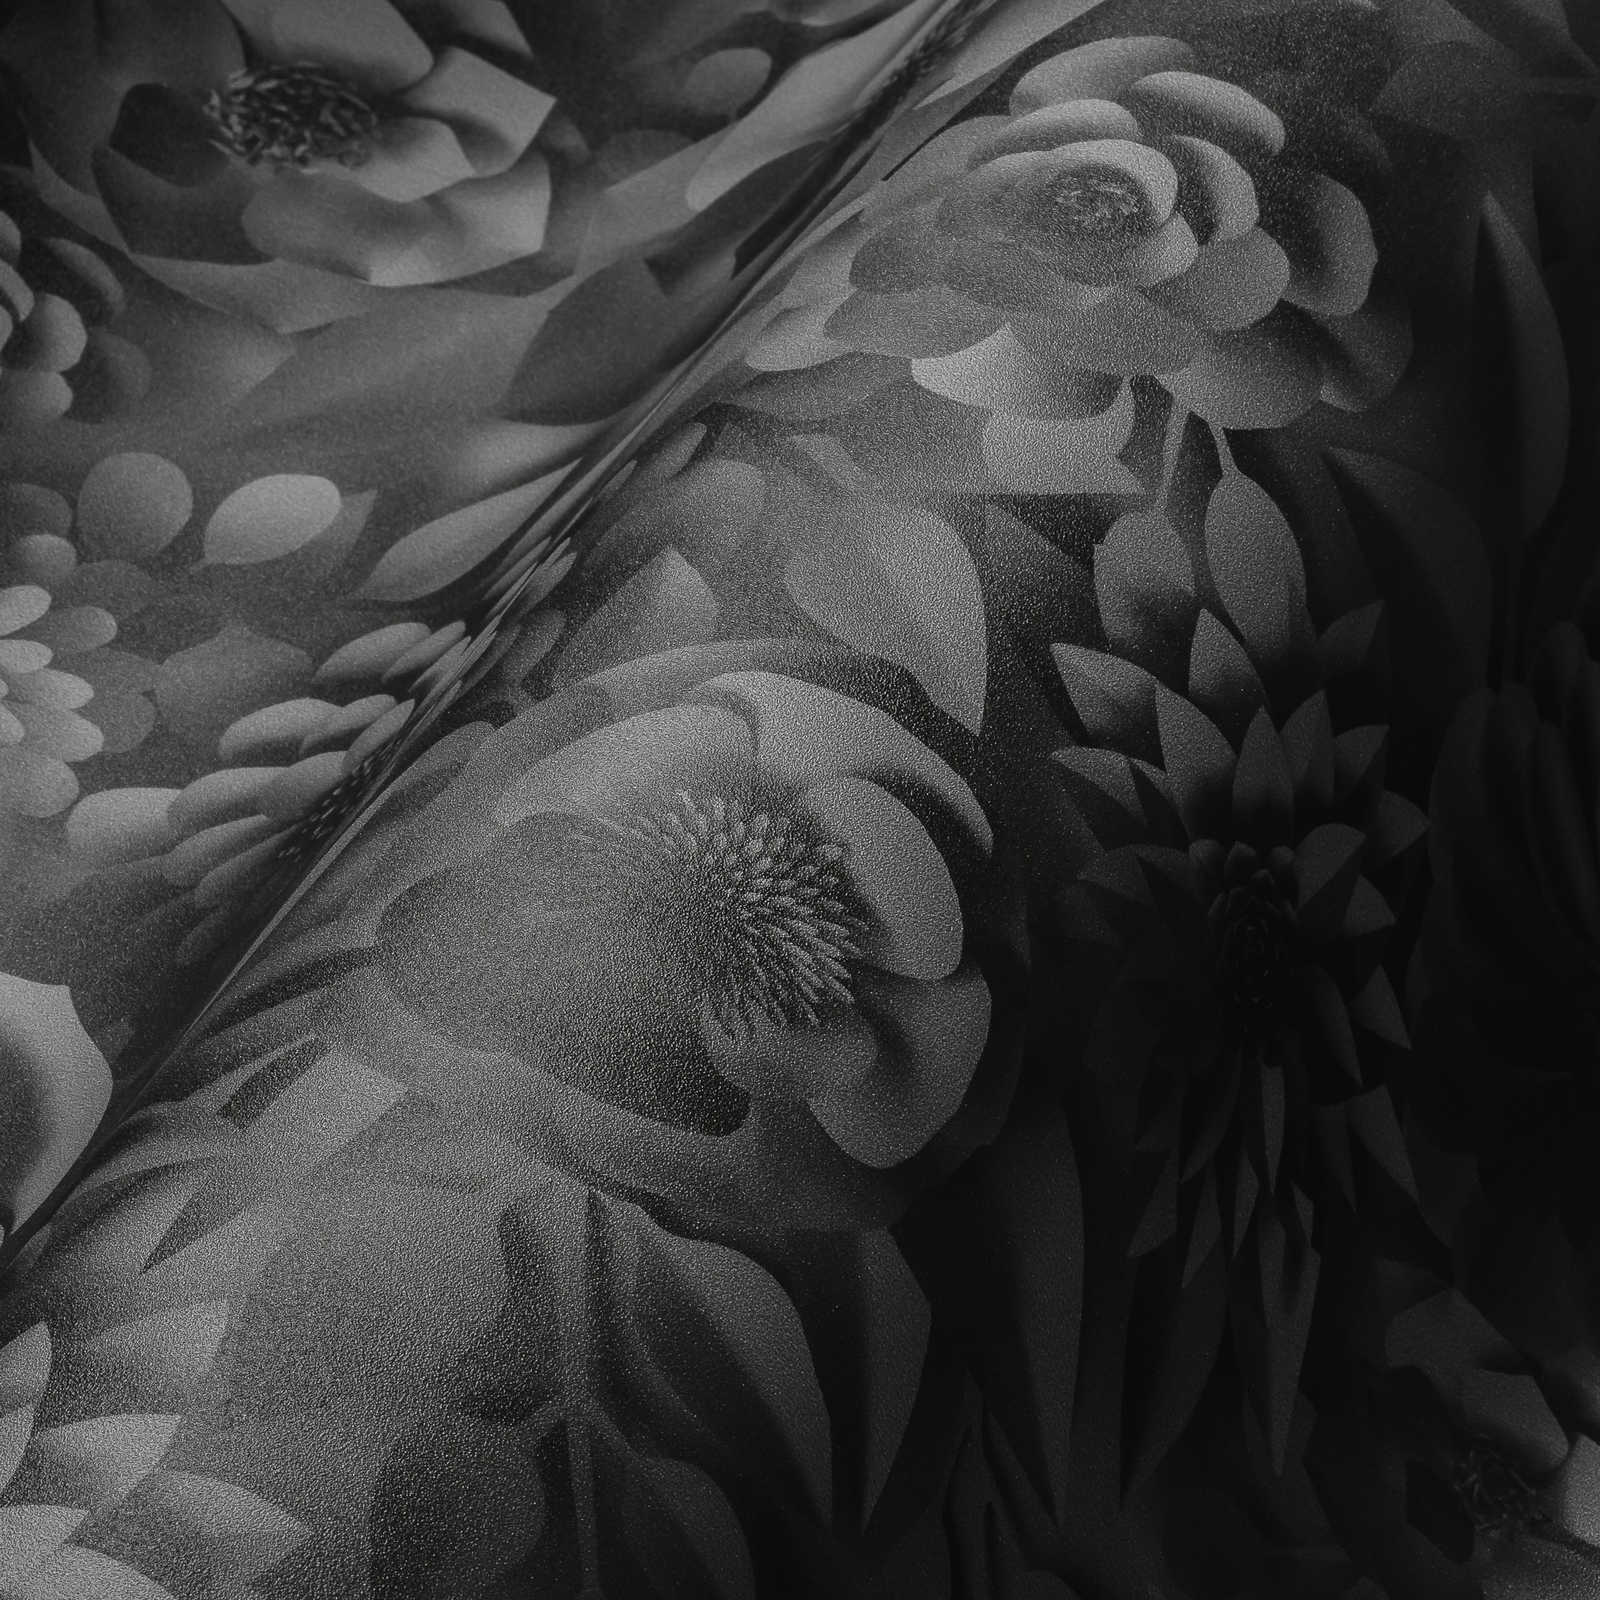             Papel pintado 3D flores - Gris, Negro
        